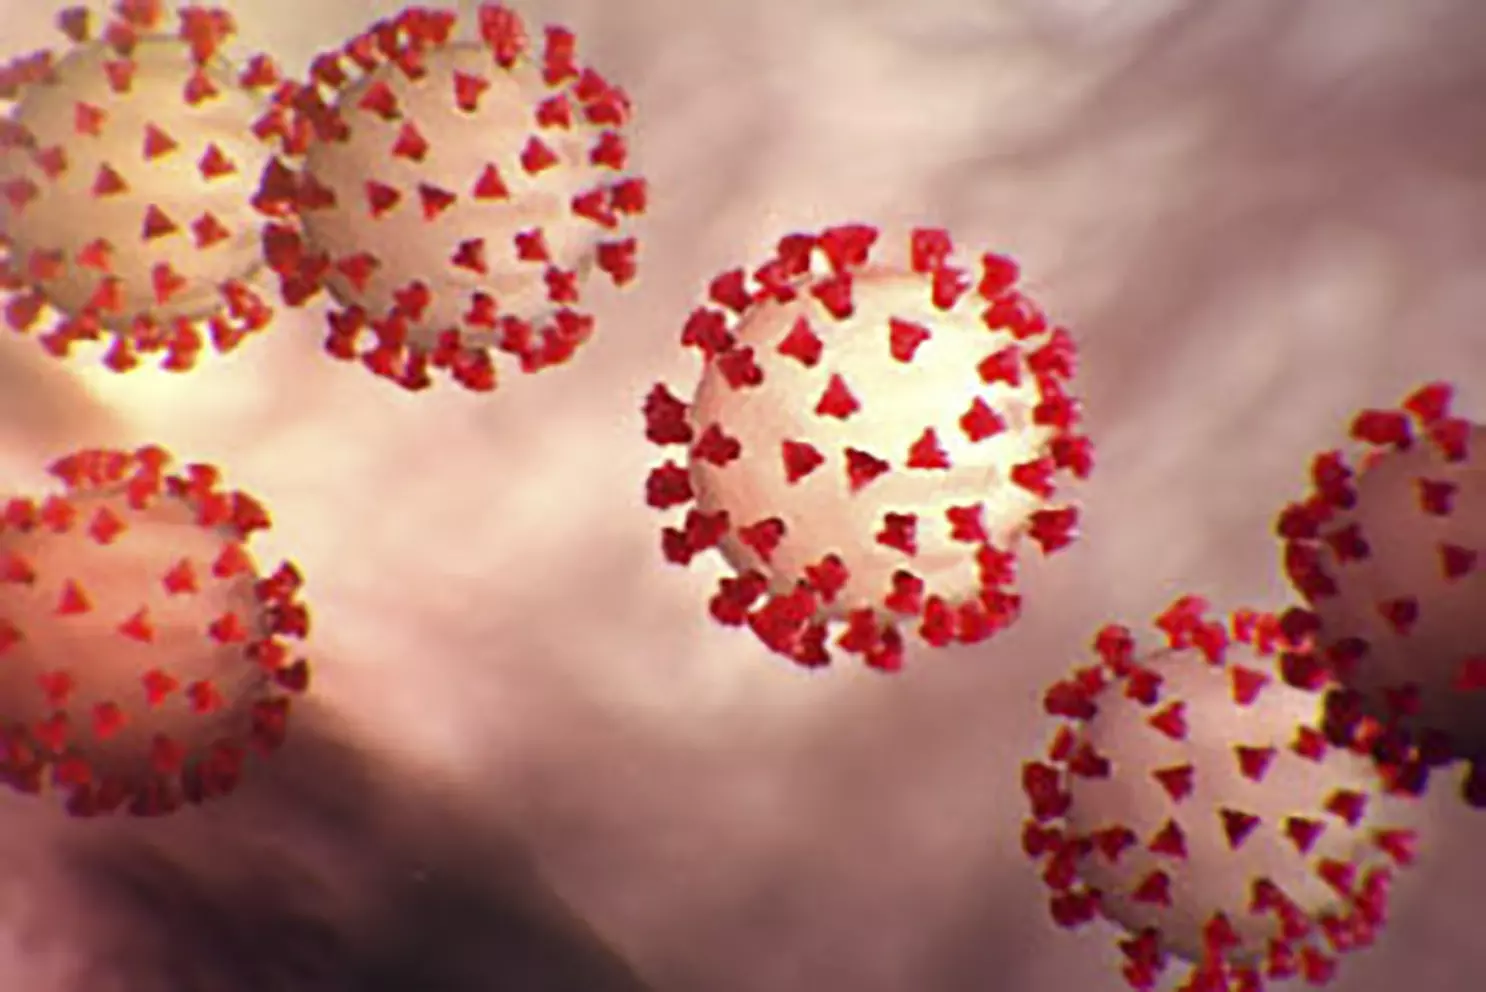 Coronavirus: అమెరికాలో మరణాల సంఖ్య  50వేలు దాటేసింది..